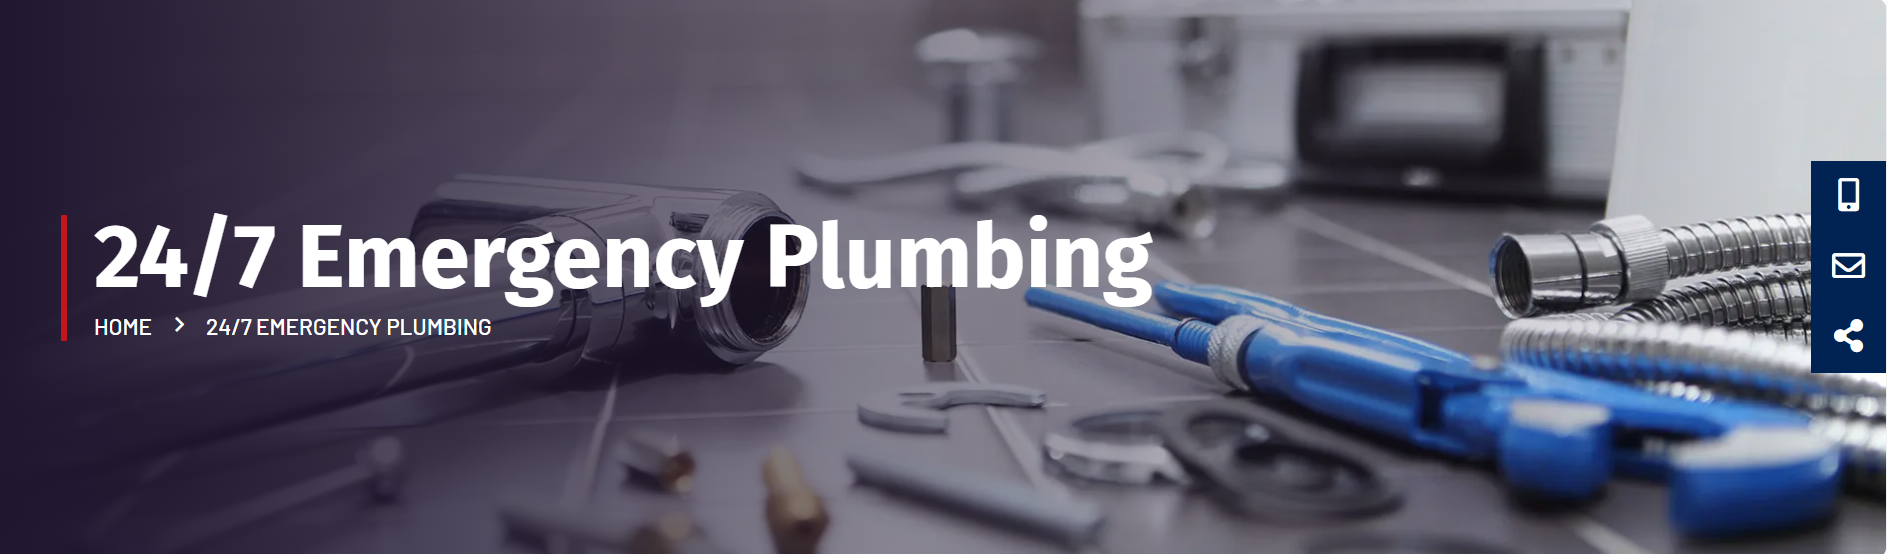 General ways to repair a sump pump by an Emergency Plumber in Granville